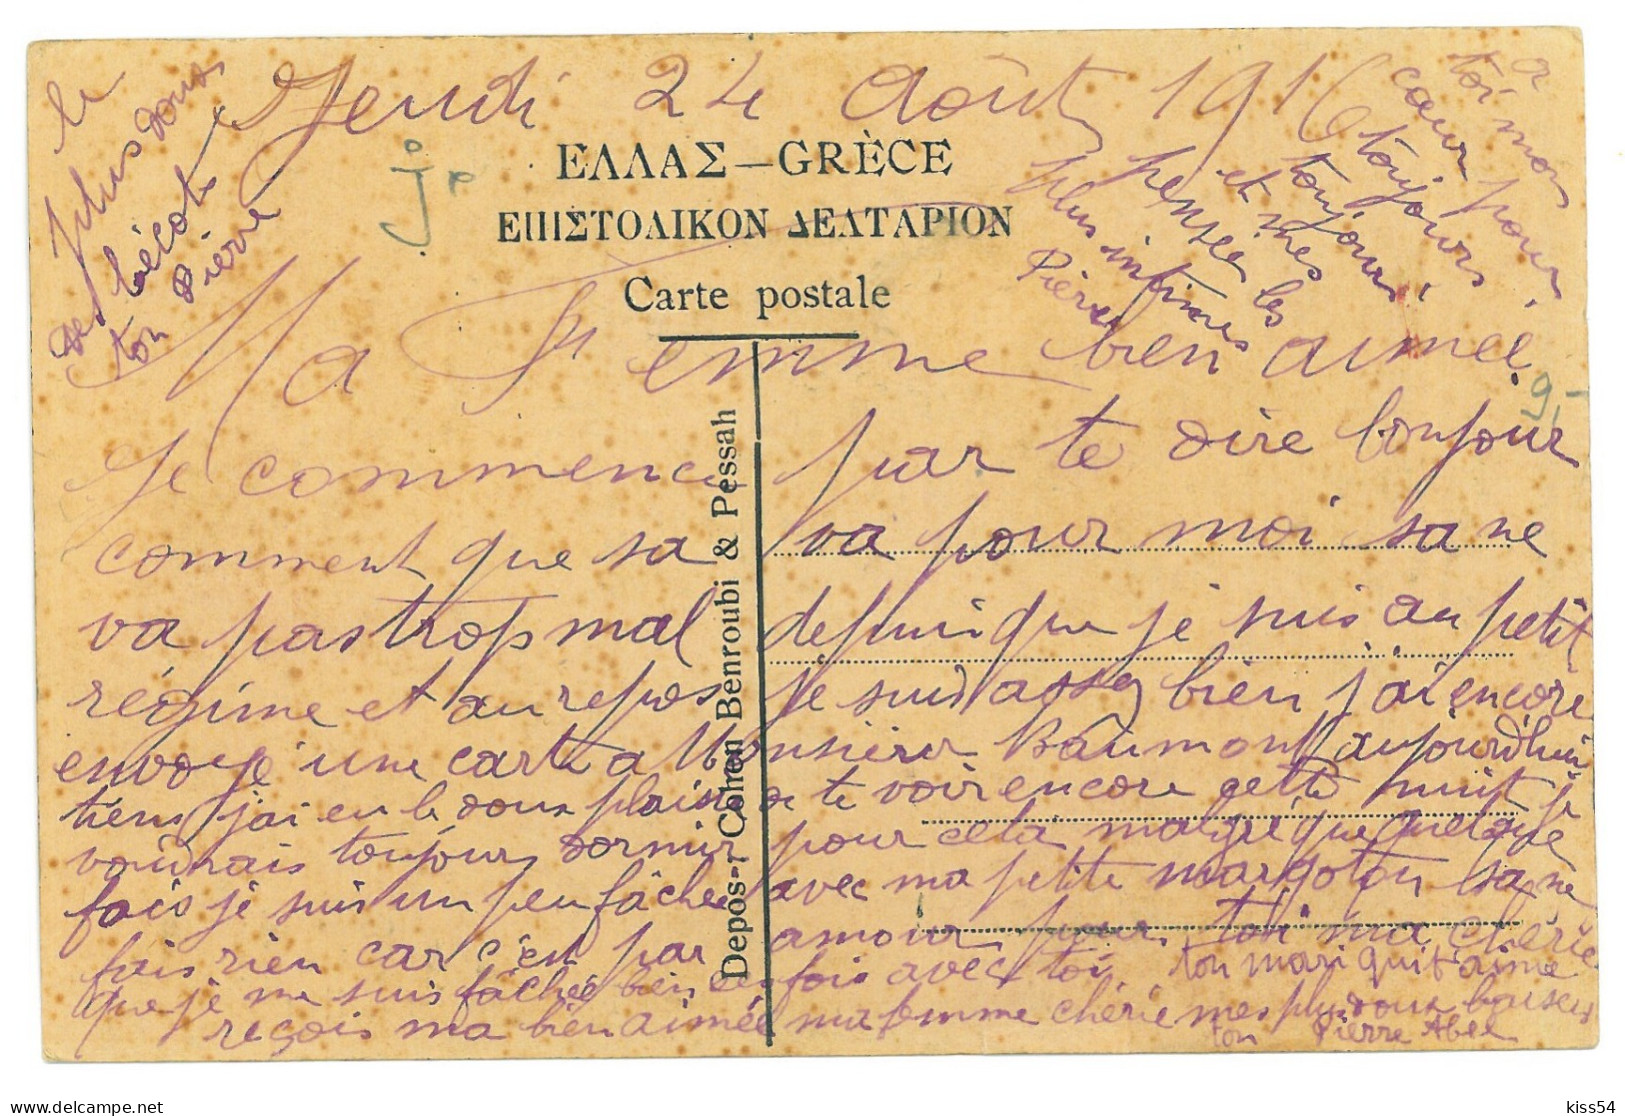 GR 3 - 20544 SALONIQUE, Israelite Women, Greece - Old Postcard - Used - 1916 - Griekenland